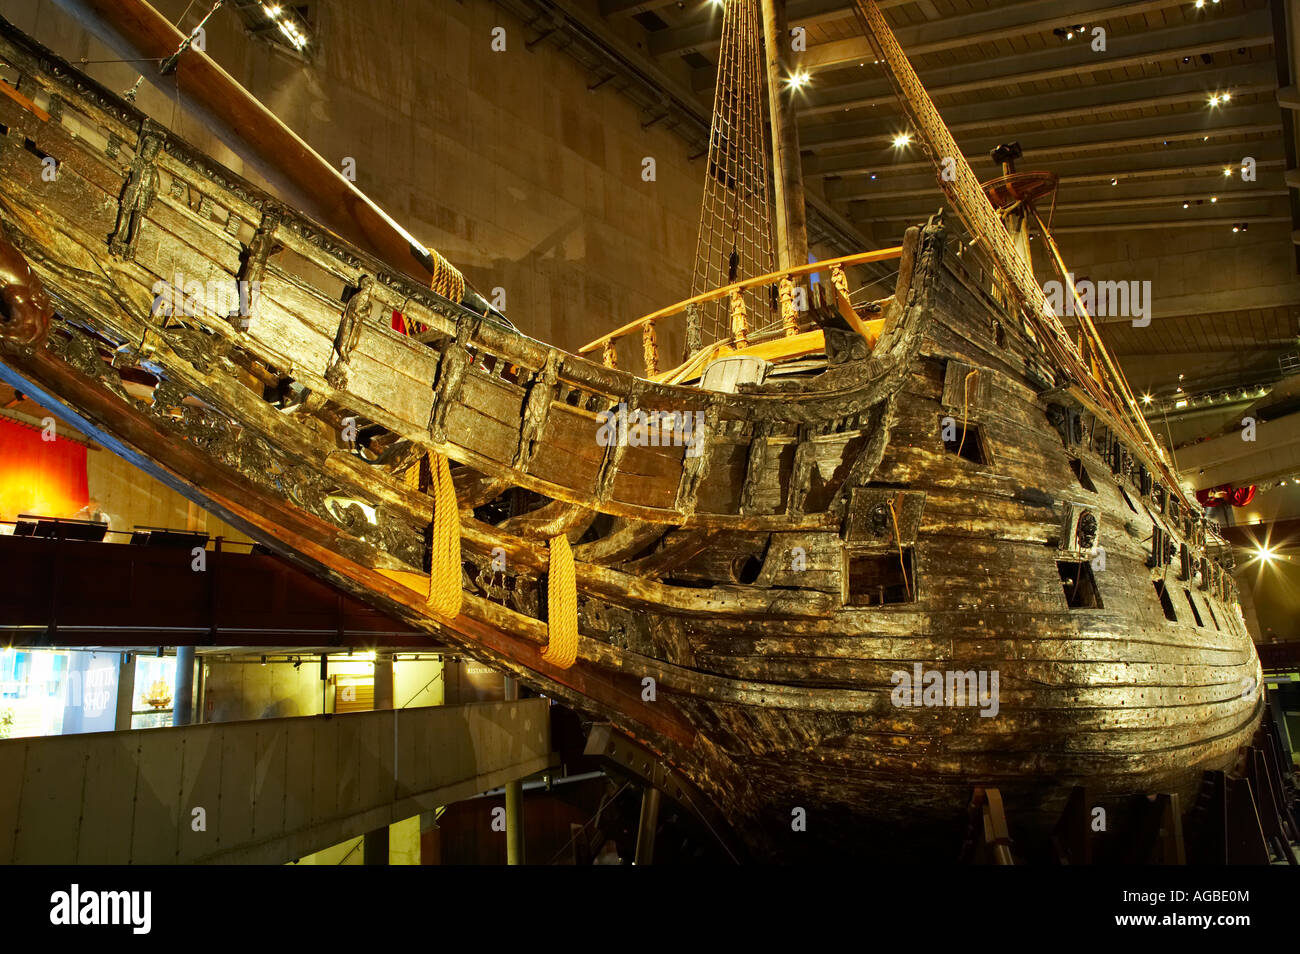 Vasa Warship in Museum Display, Stockholm, Sweden Stock Photo